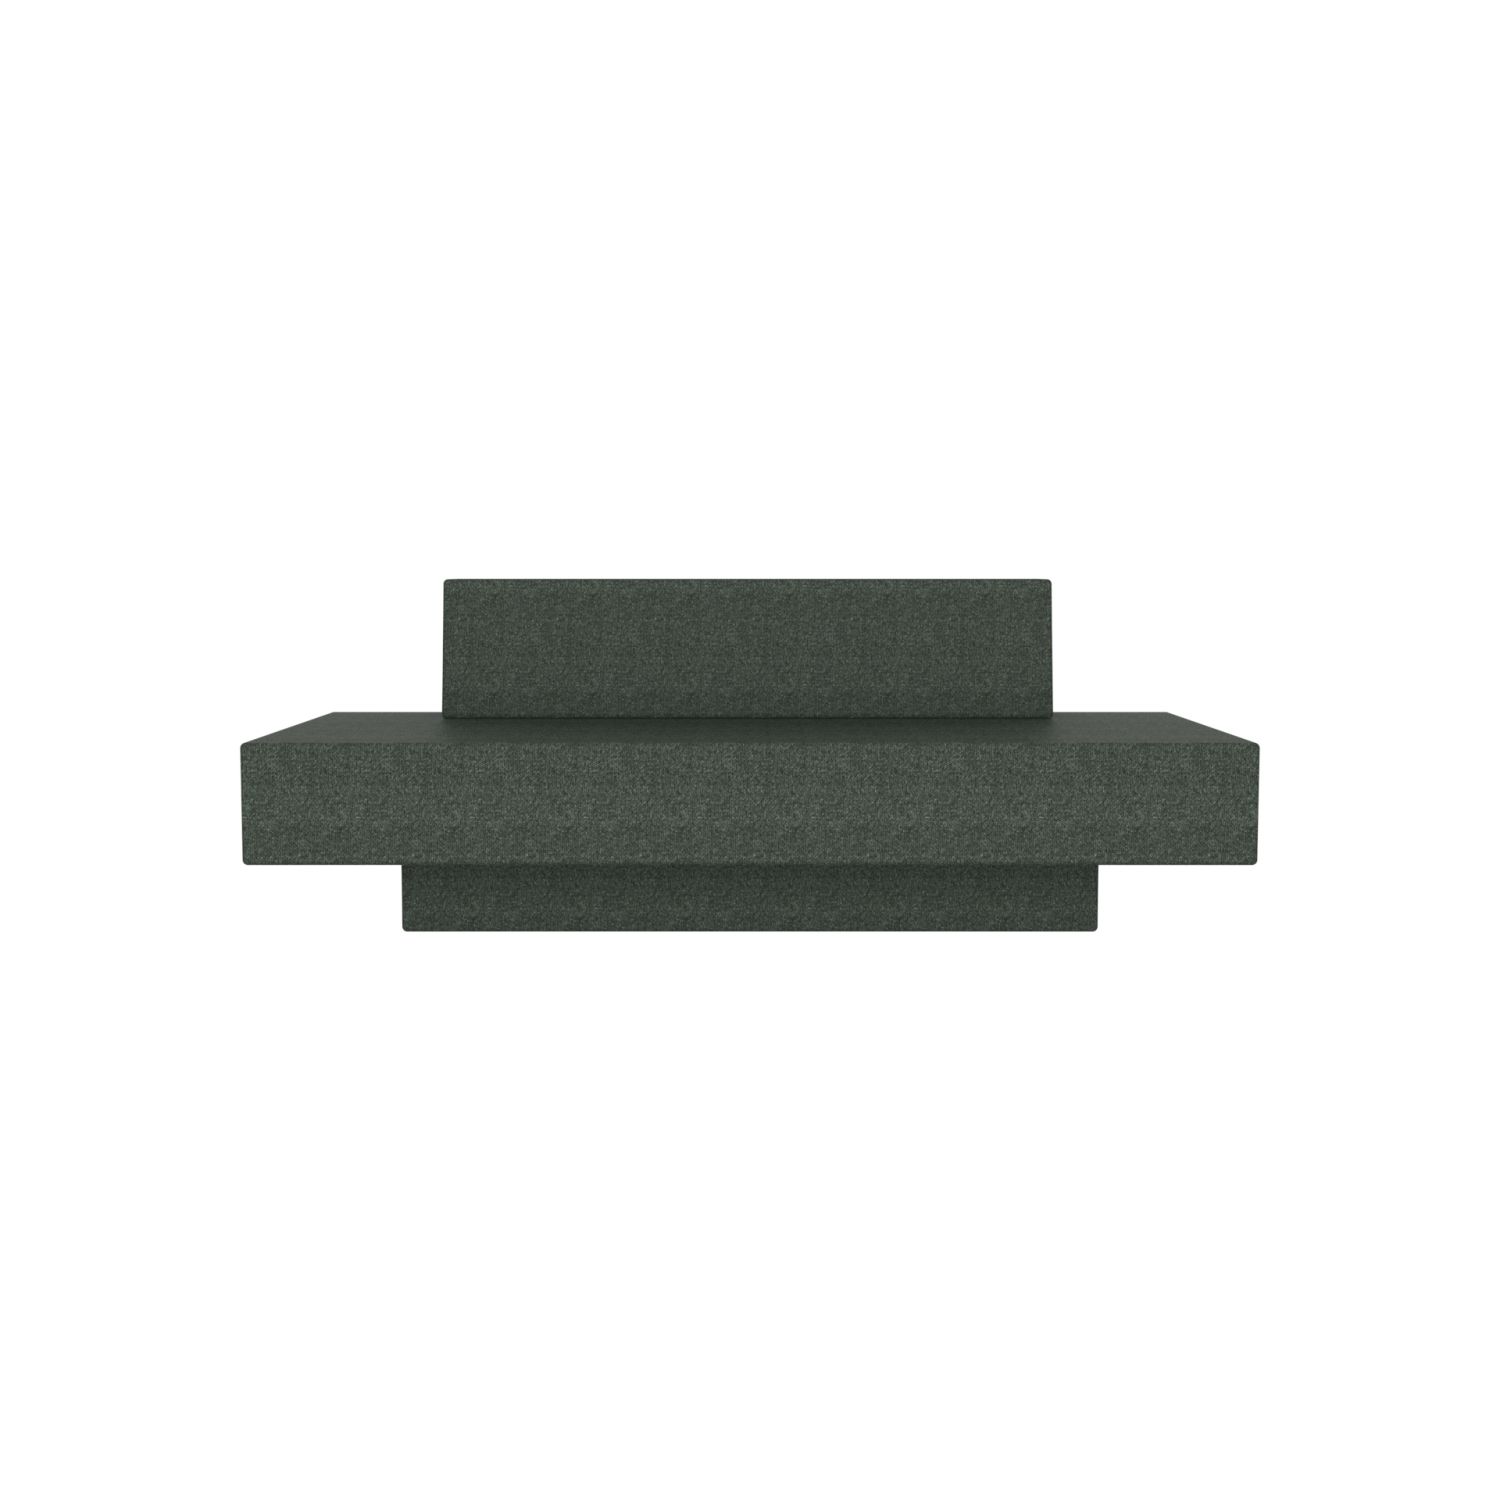 lensvelt atelier van lieshout glyder sofa with sliding backrest 85 x 190 cm moss summer green 38 price level 2